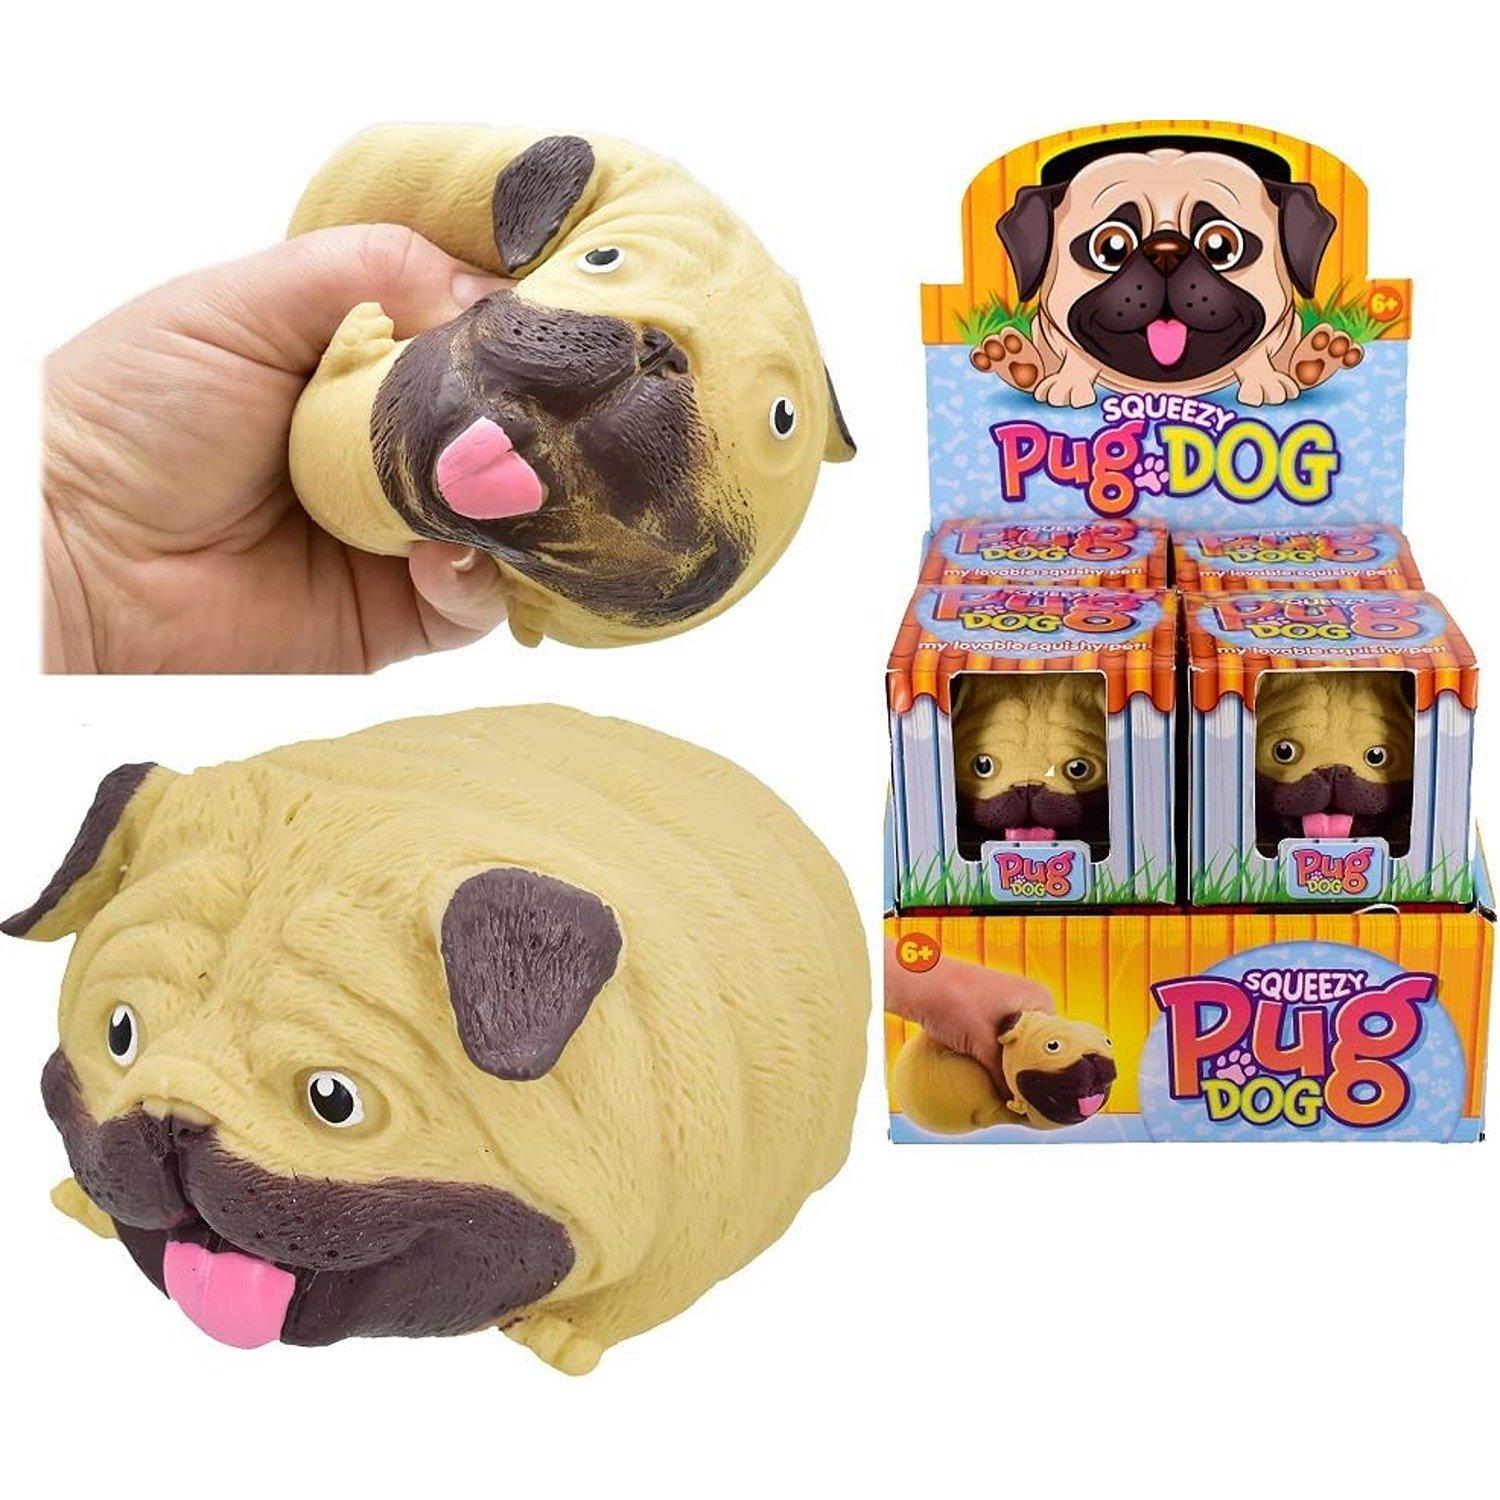 Squeezey Pug Dog